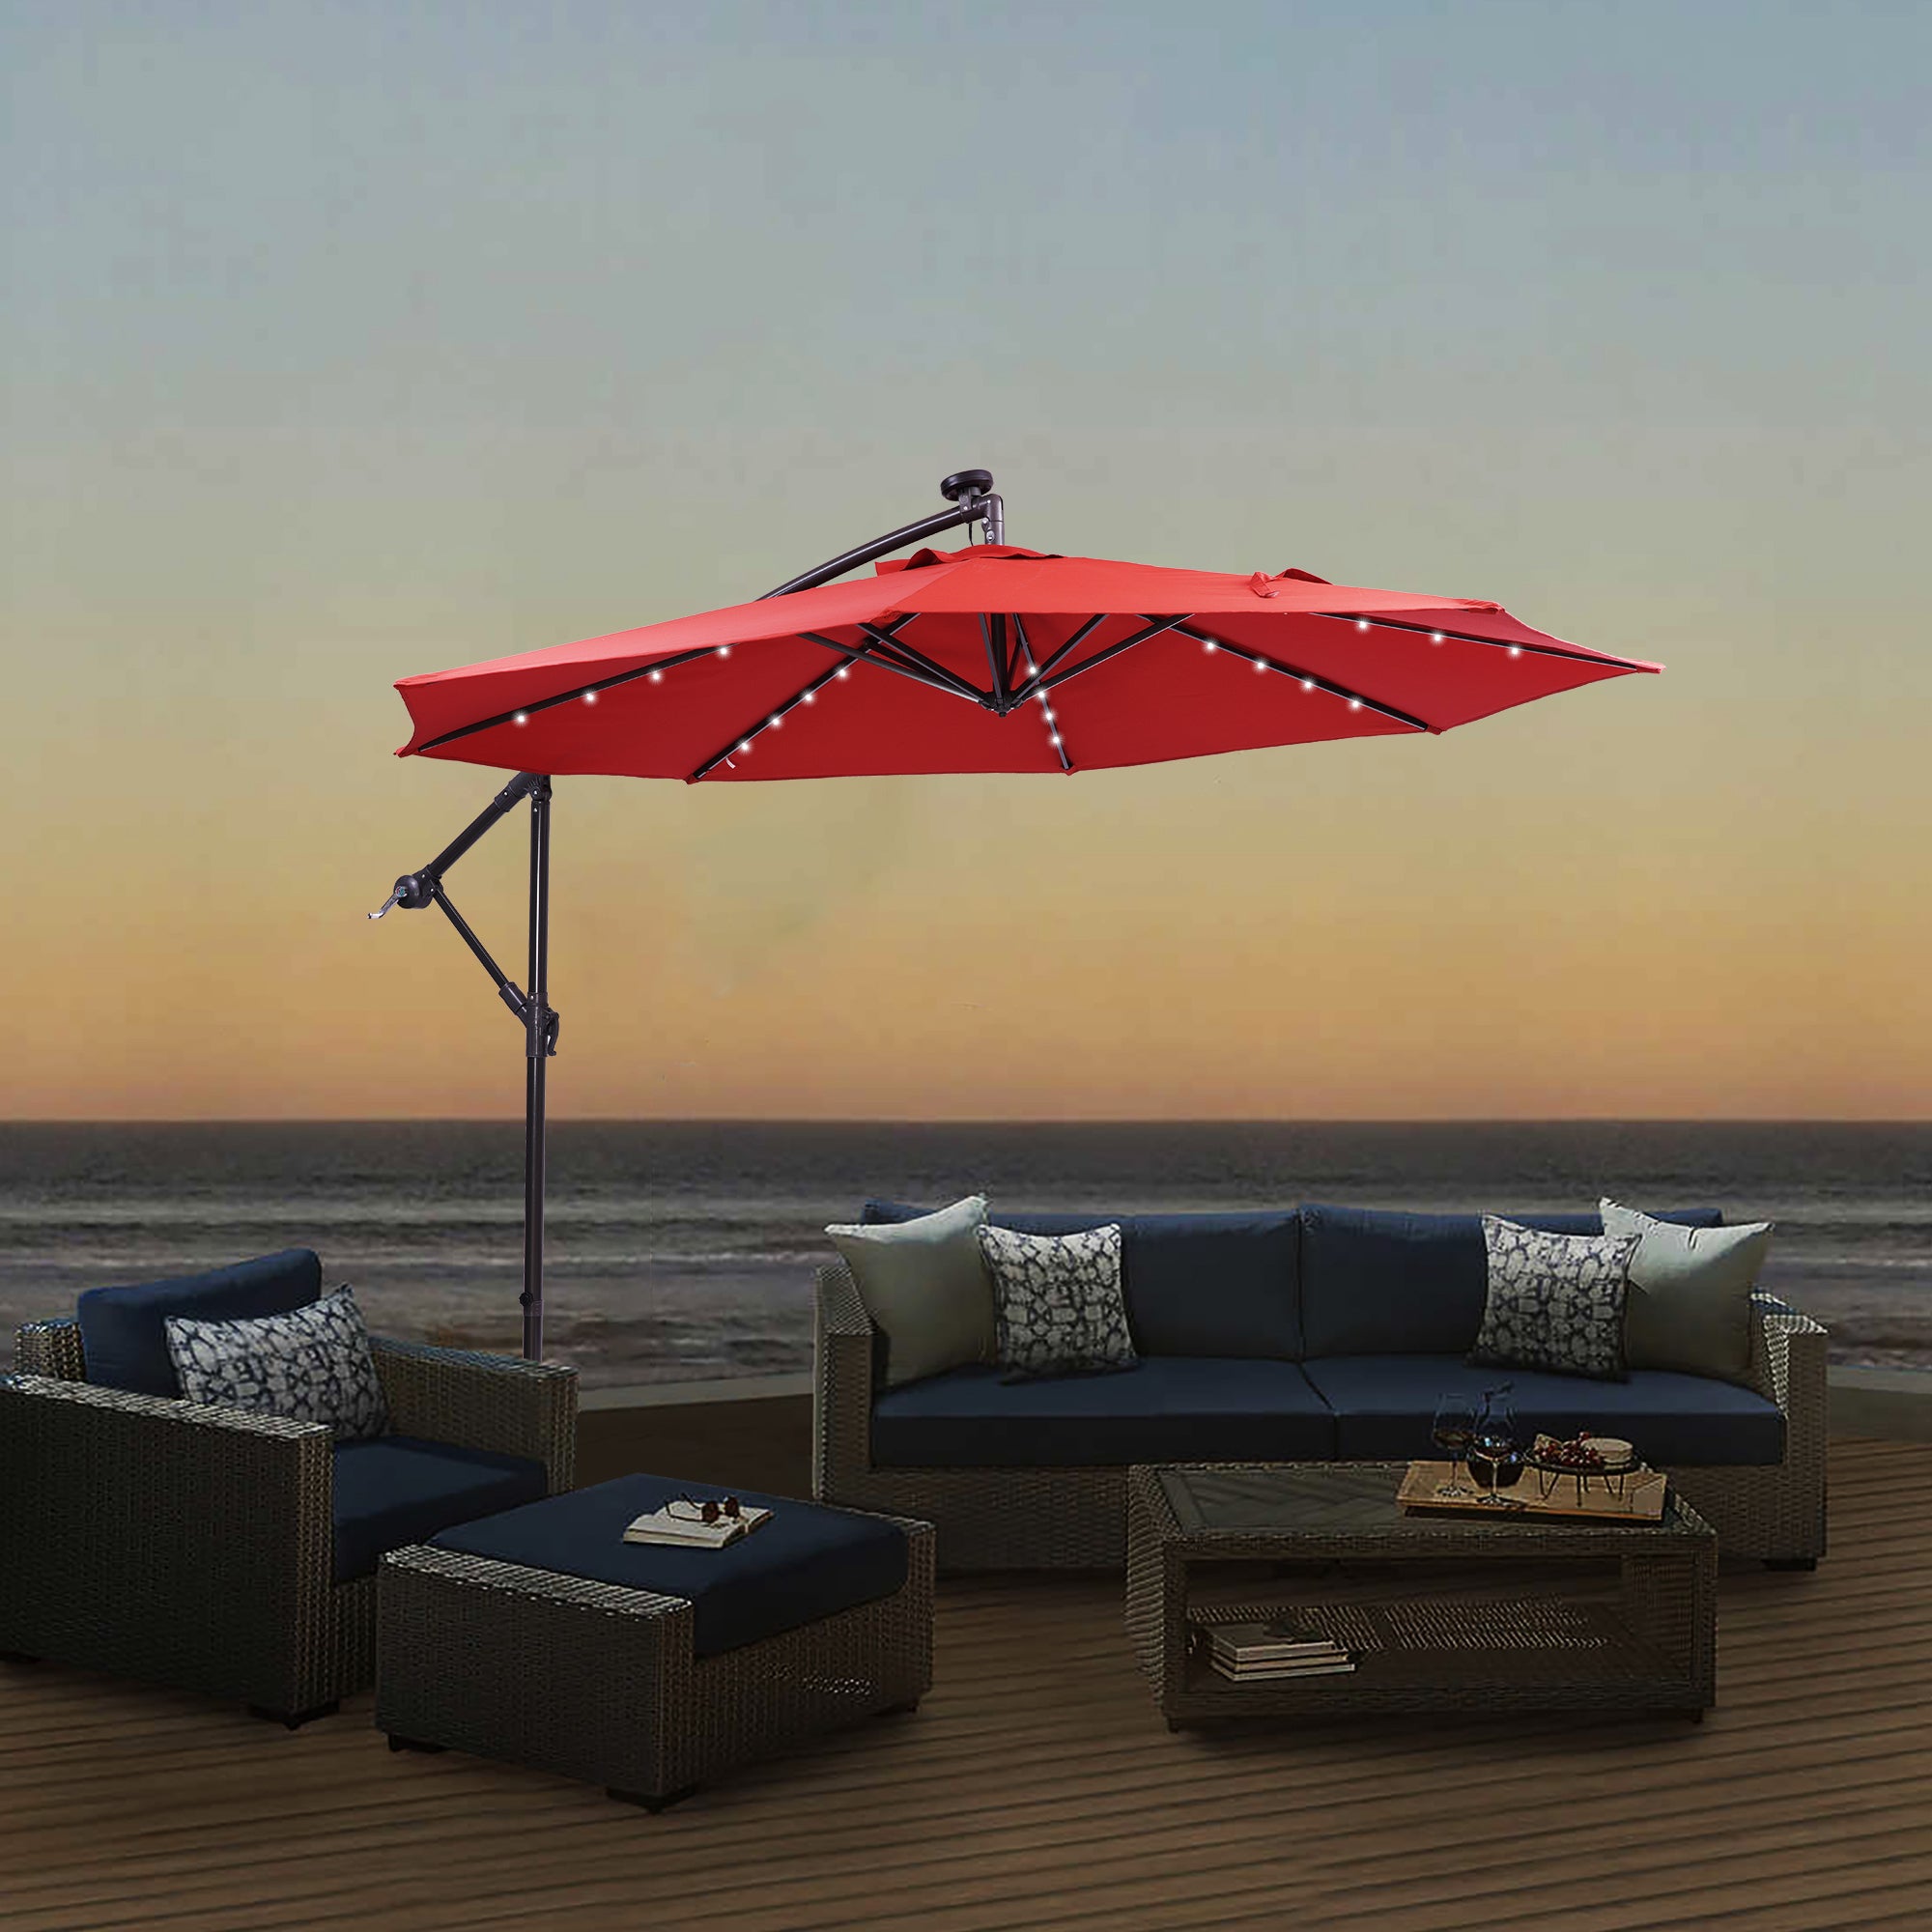 10 FT Solar LED Patio Outdoor Umbrella Hanging red-metal